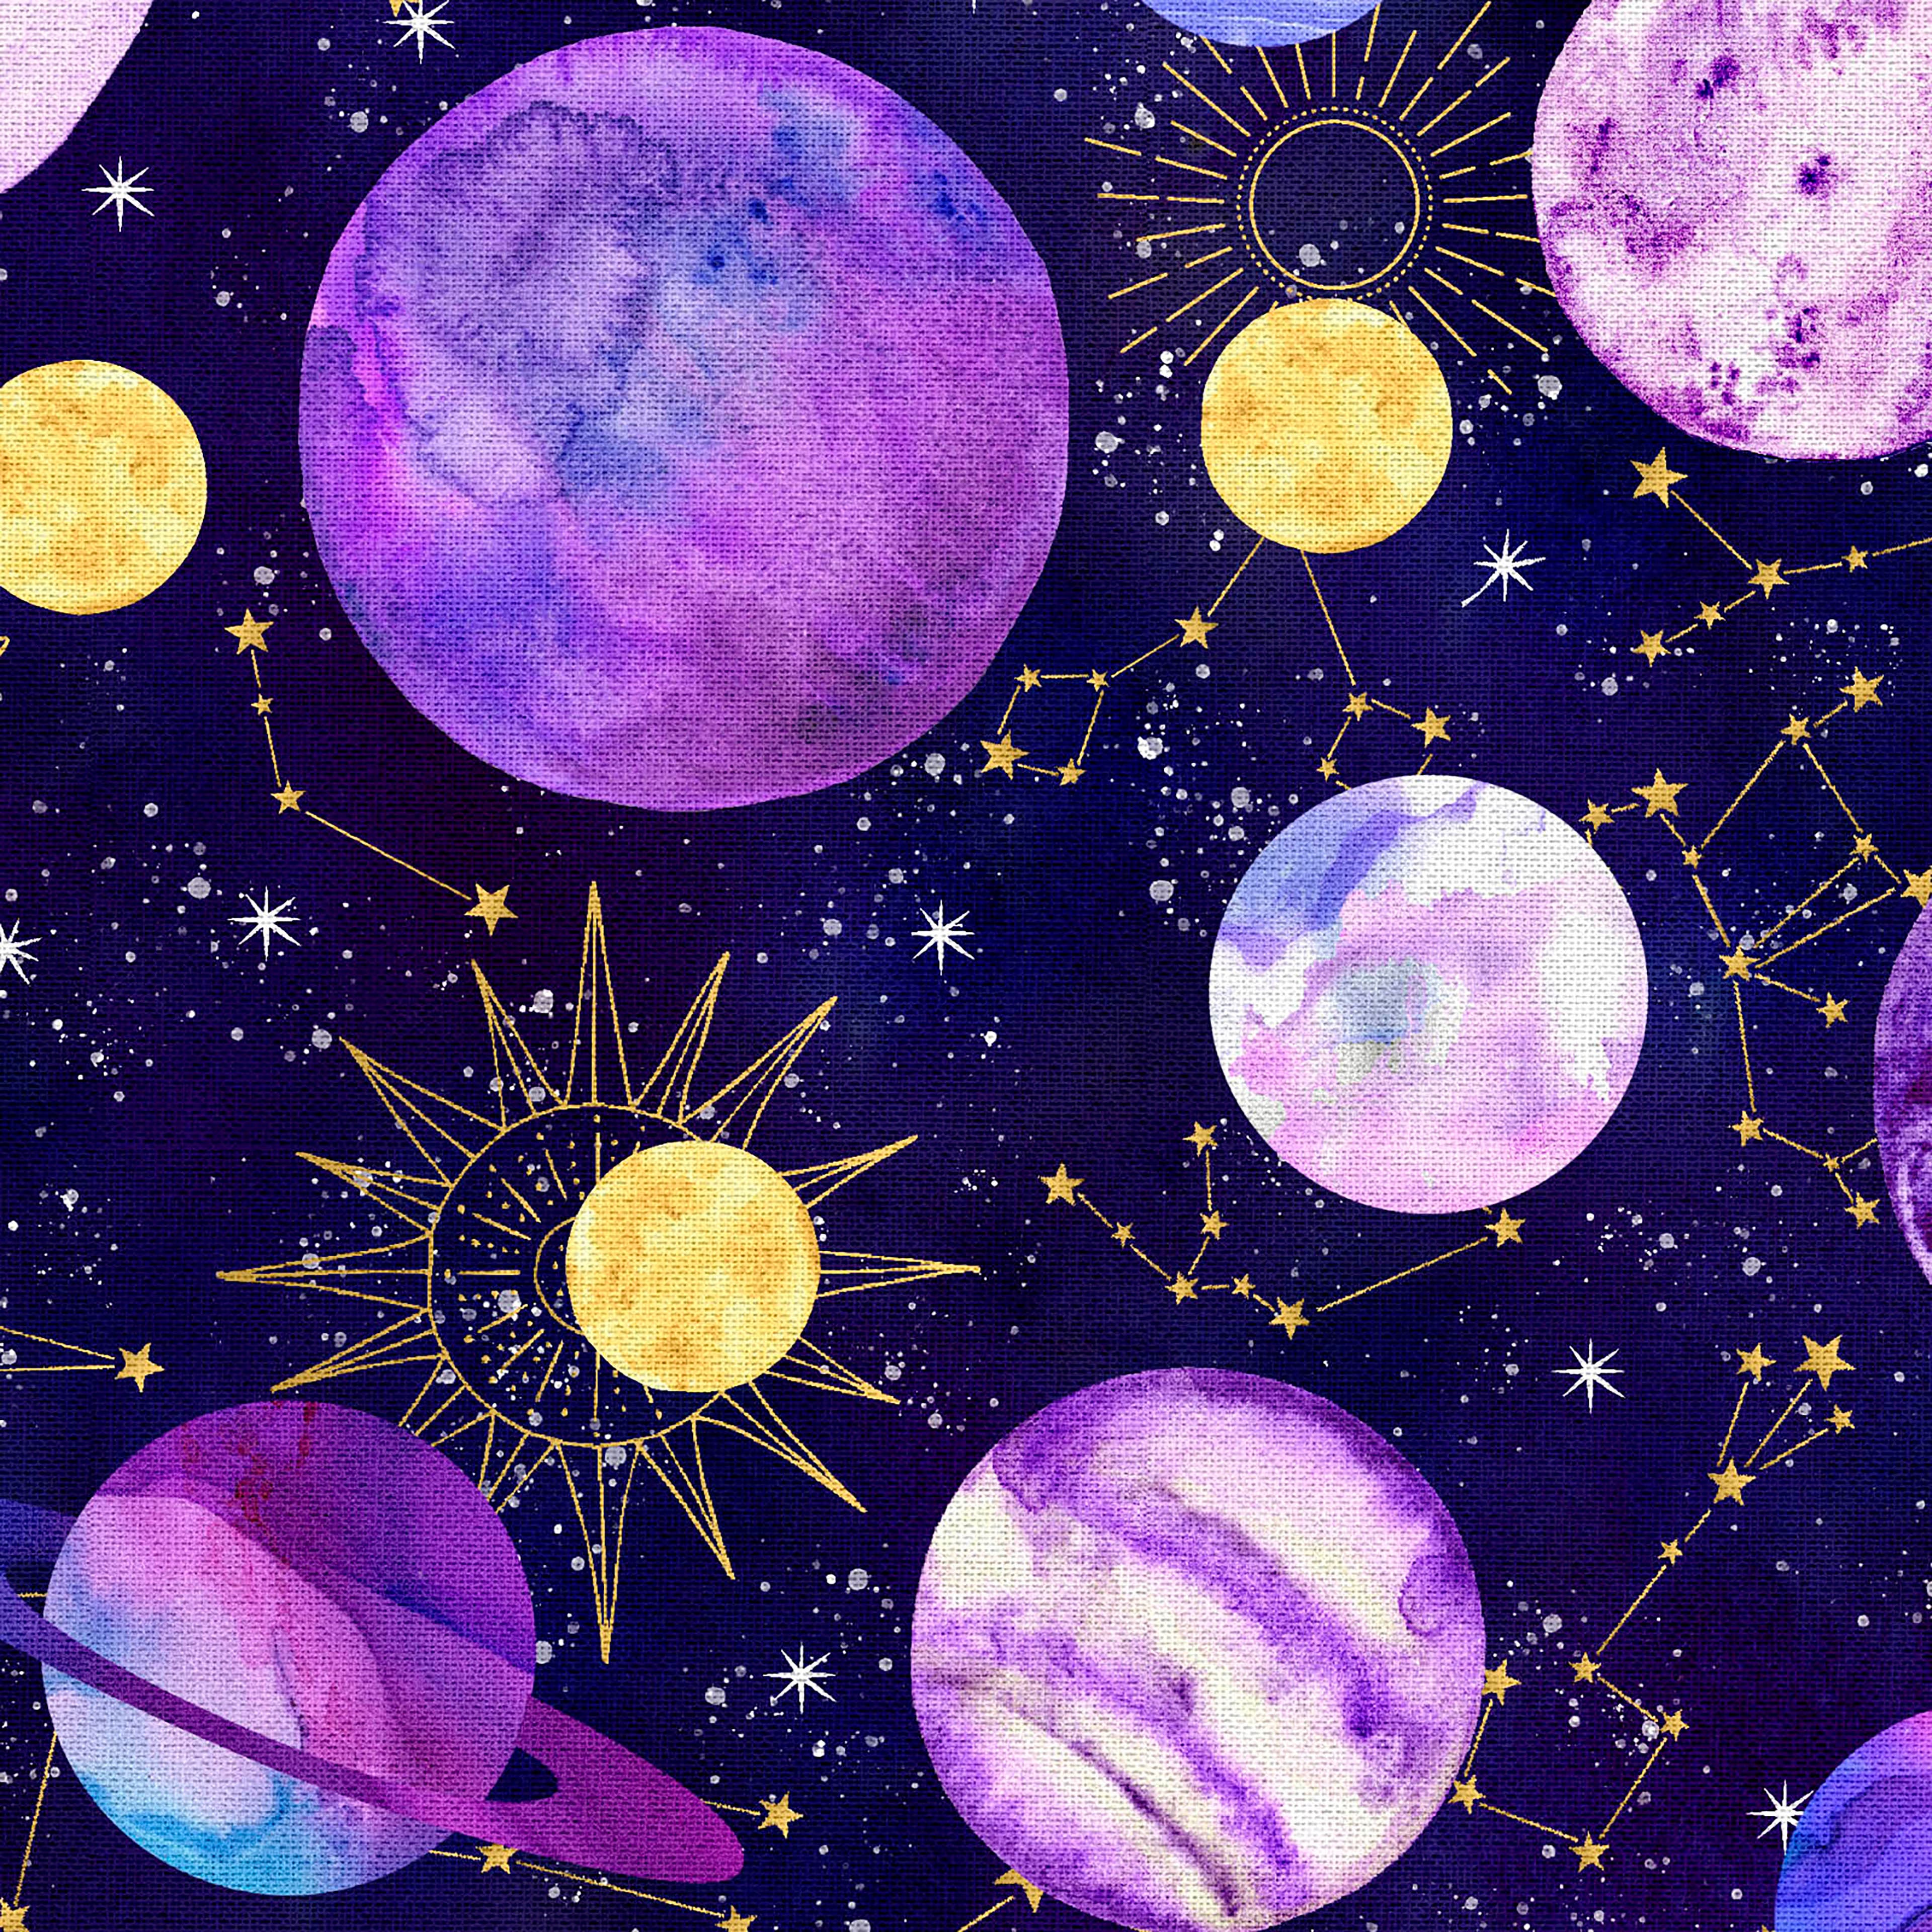 Fabric Editions Purple Planets Cotton Fabric